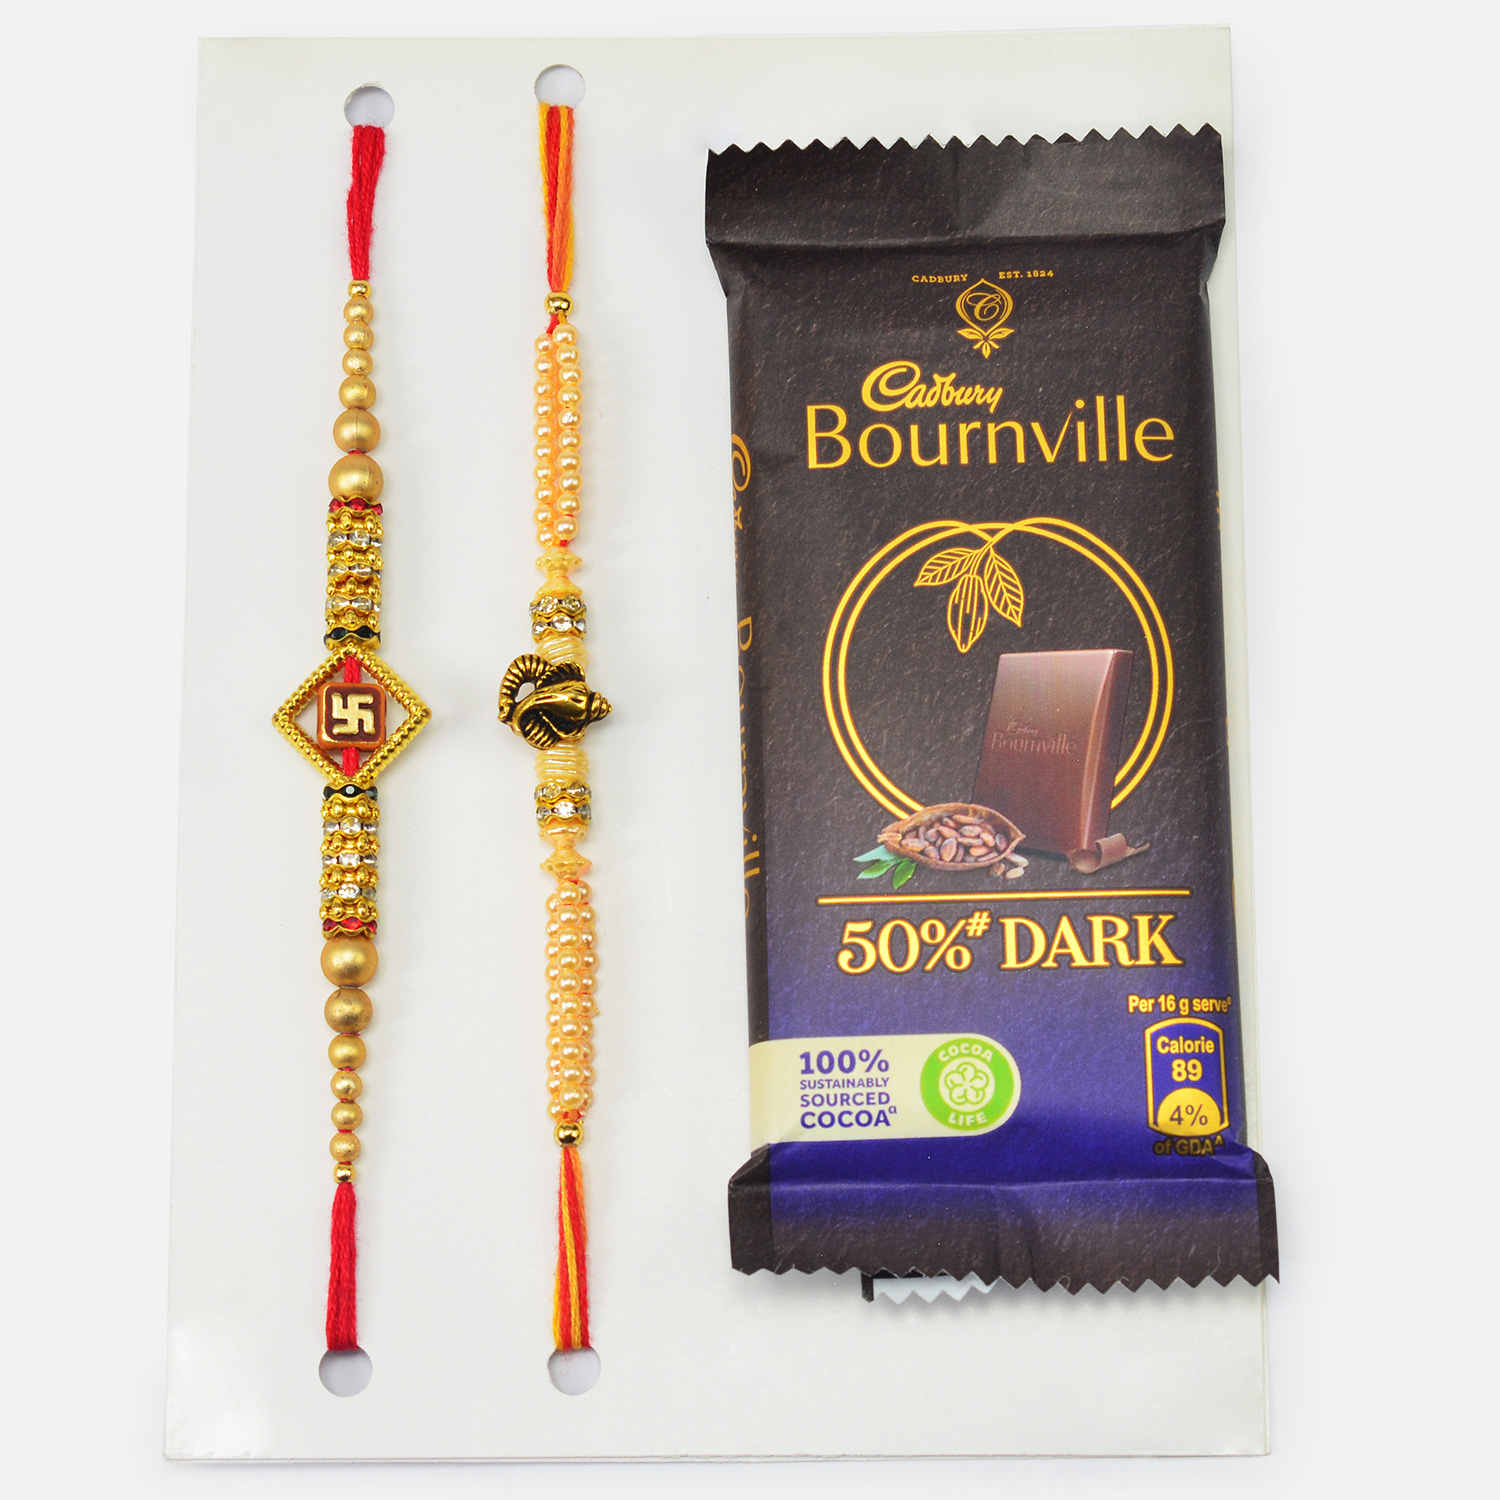 Two Amazing Looking Bhai Rakhis with Cadbury Bournville Chocolate